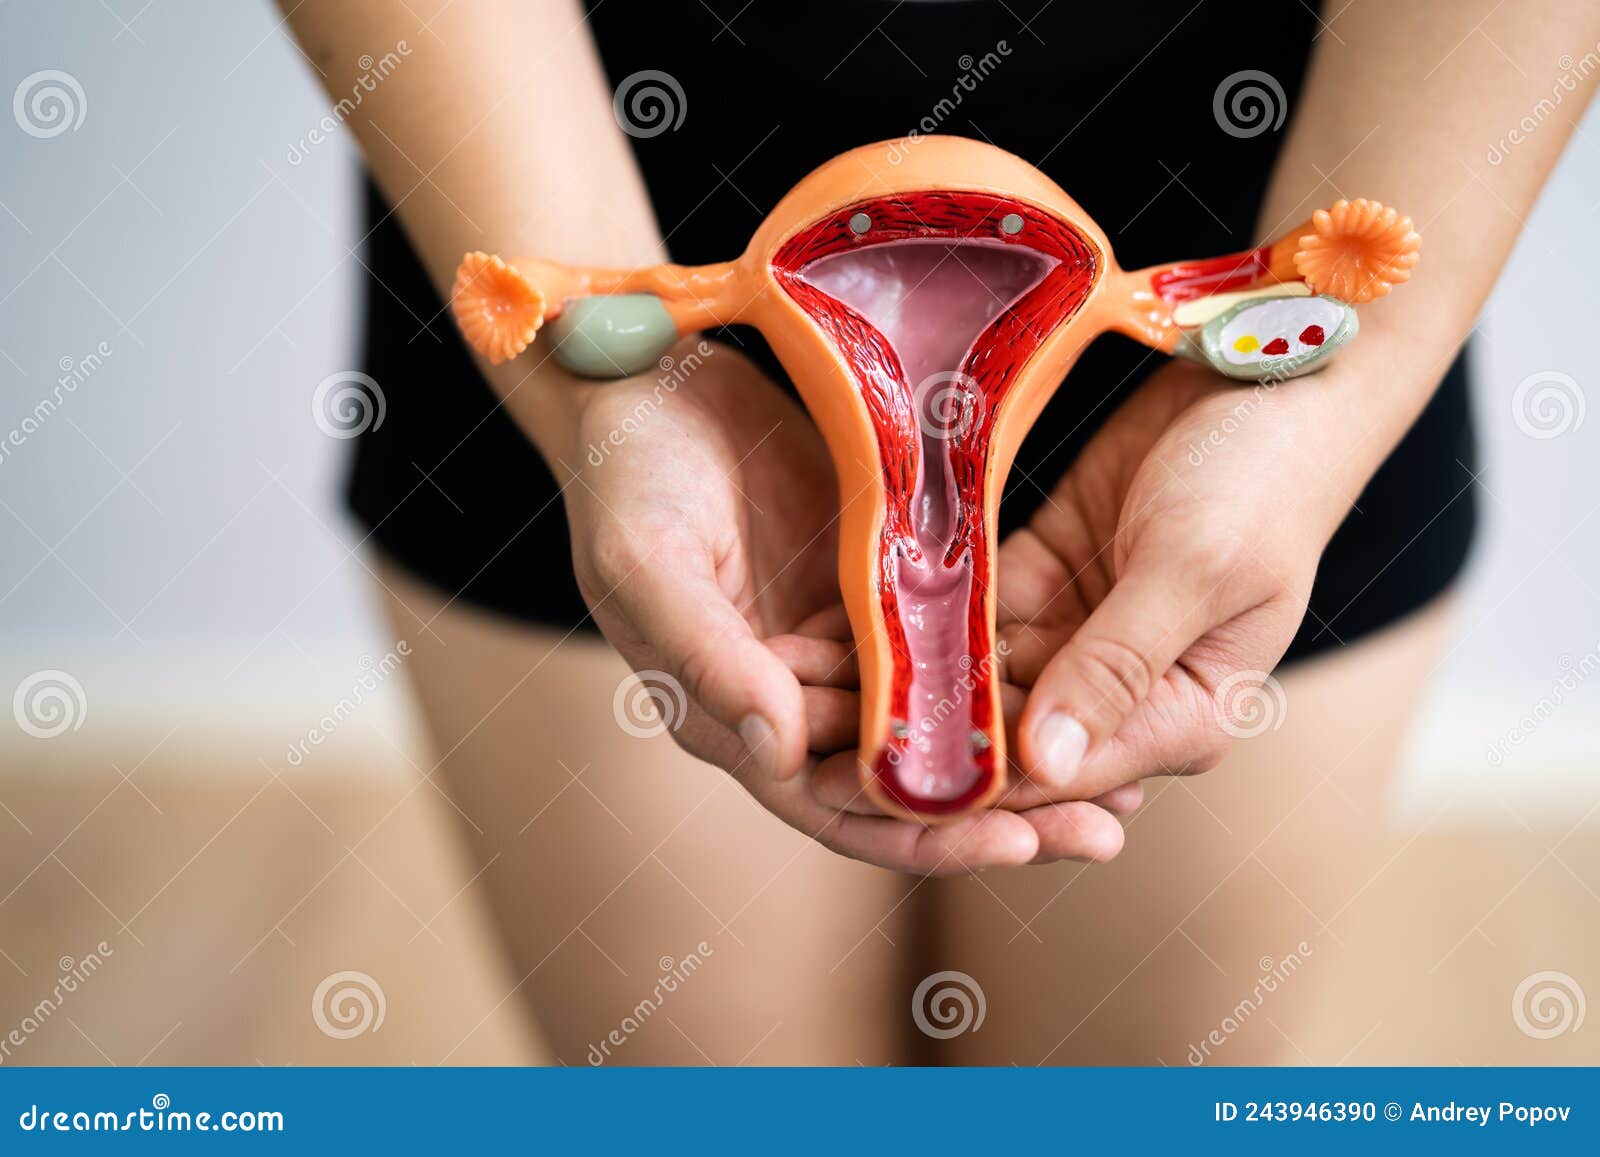 woman reproductive system. vagina and uterus